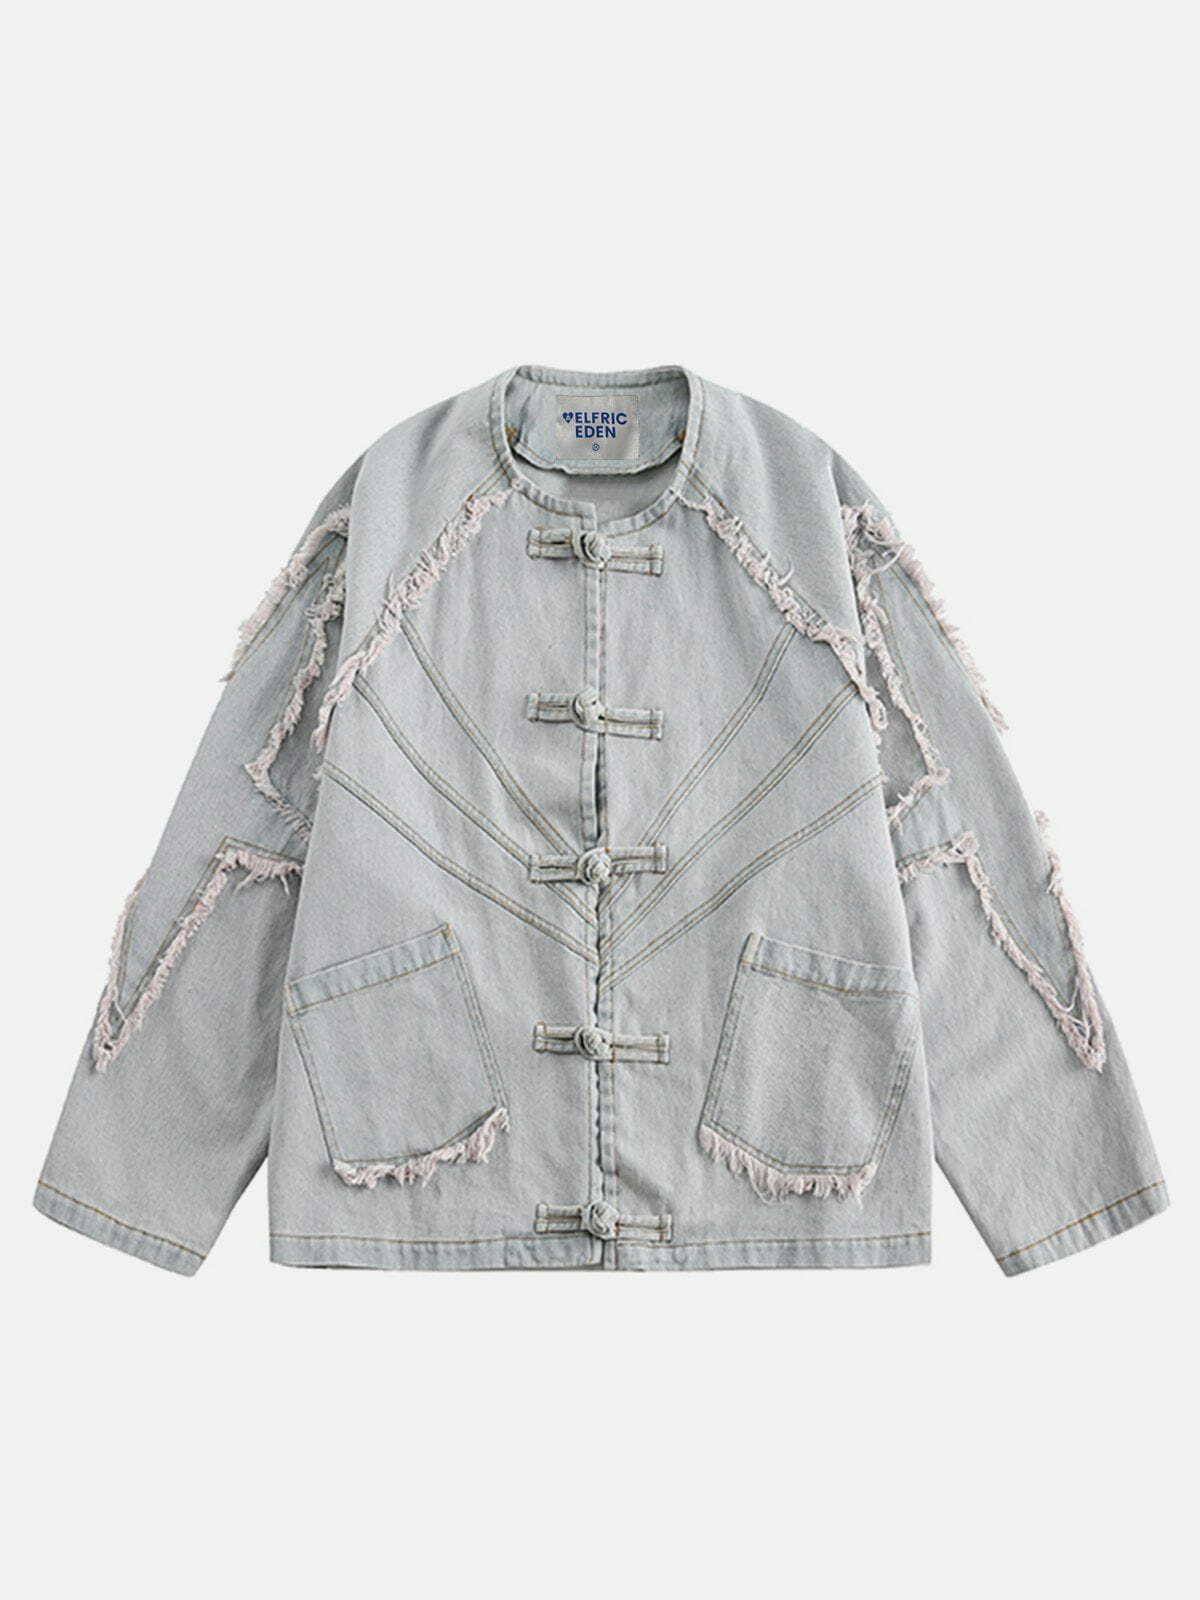 edgy plate buckle fringe jacket   chic denim streetwear 8200